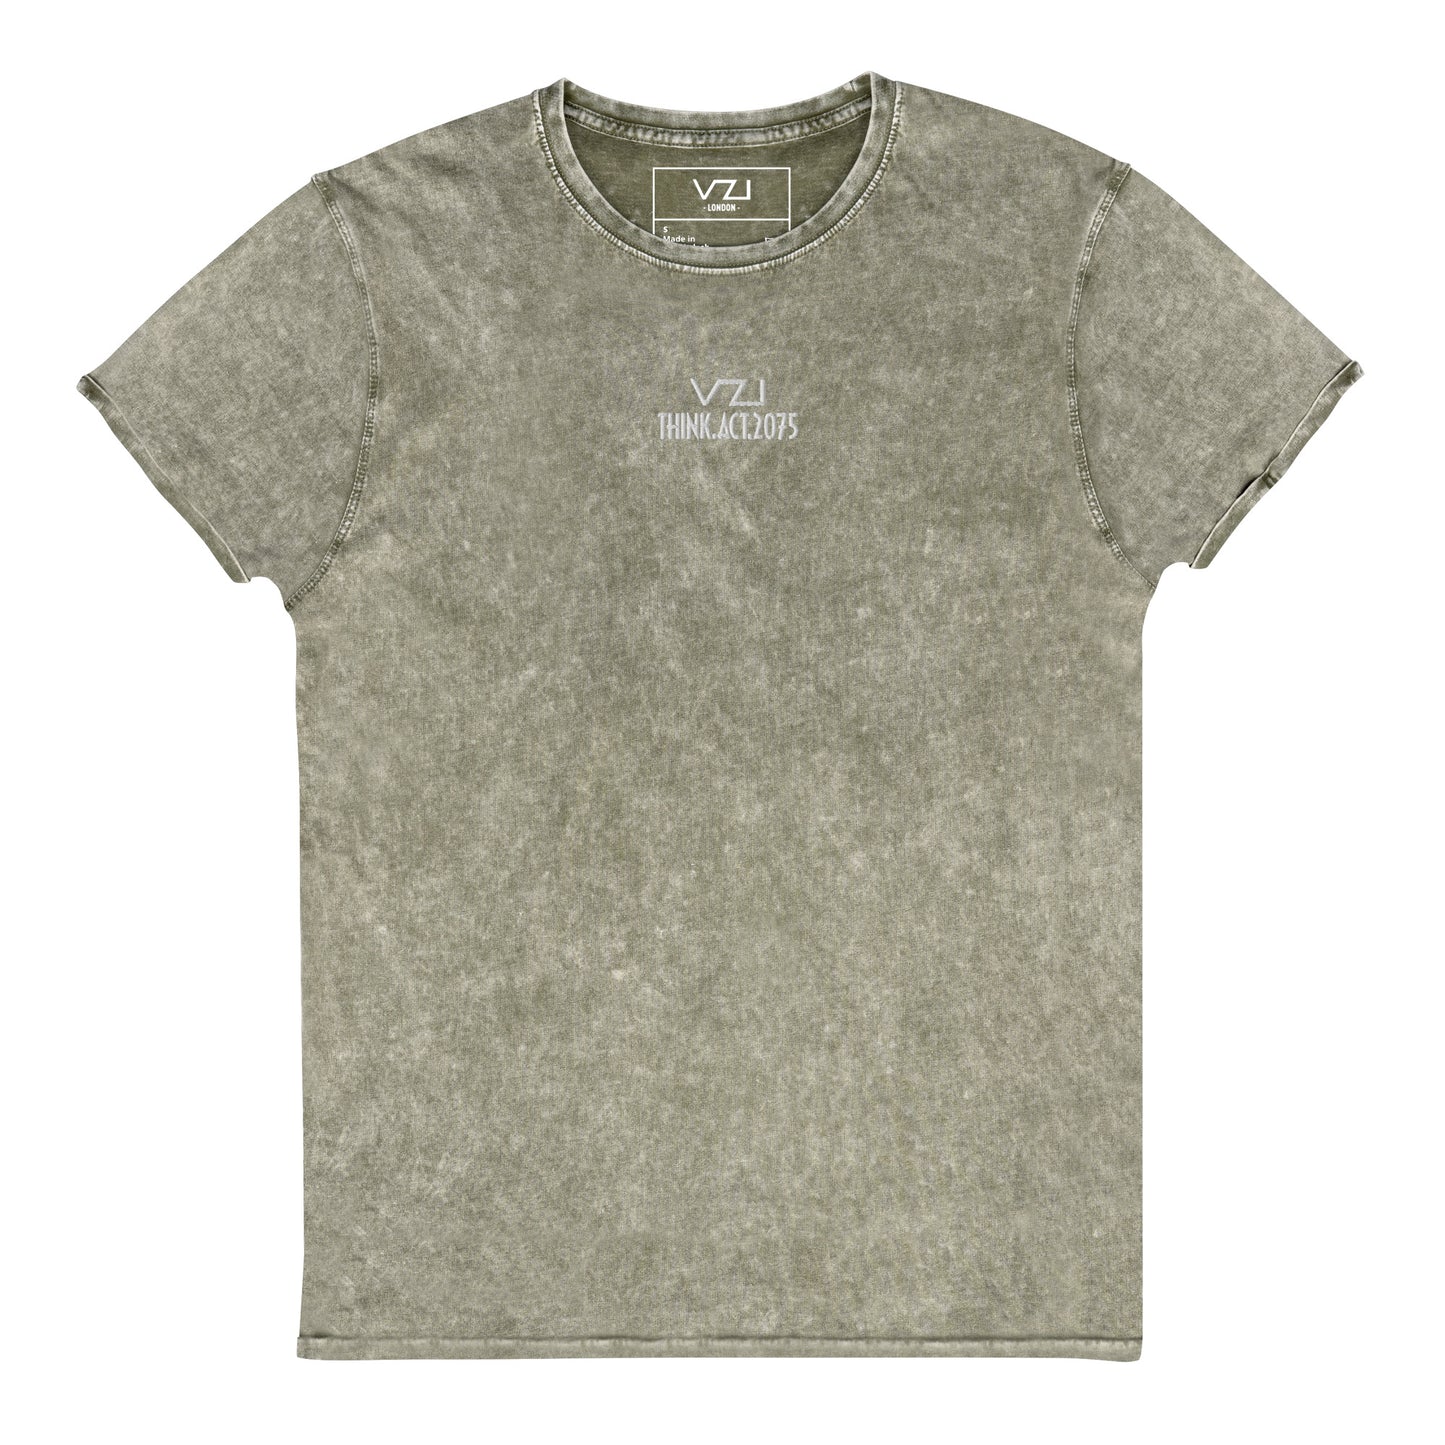 VZI T-Shirt - T-Shirt For Men's: Denim T-Shirt, Streetwear, Smart Casual, Jeans